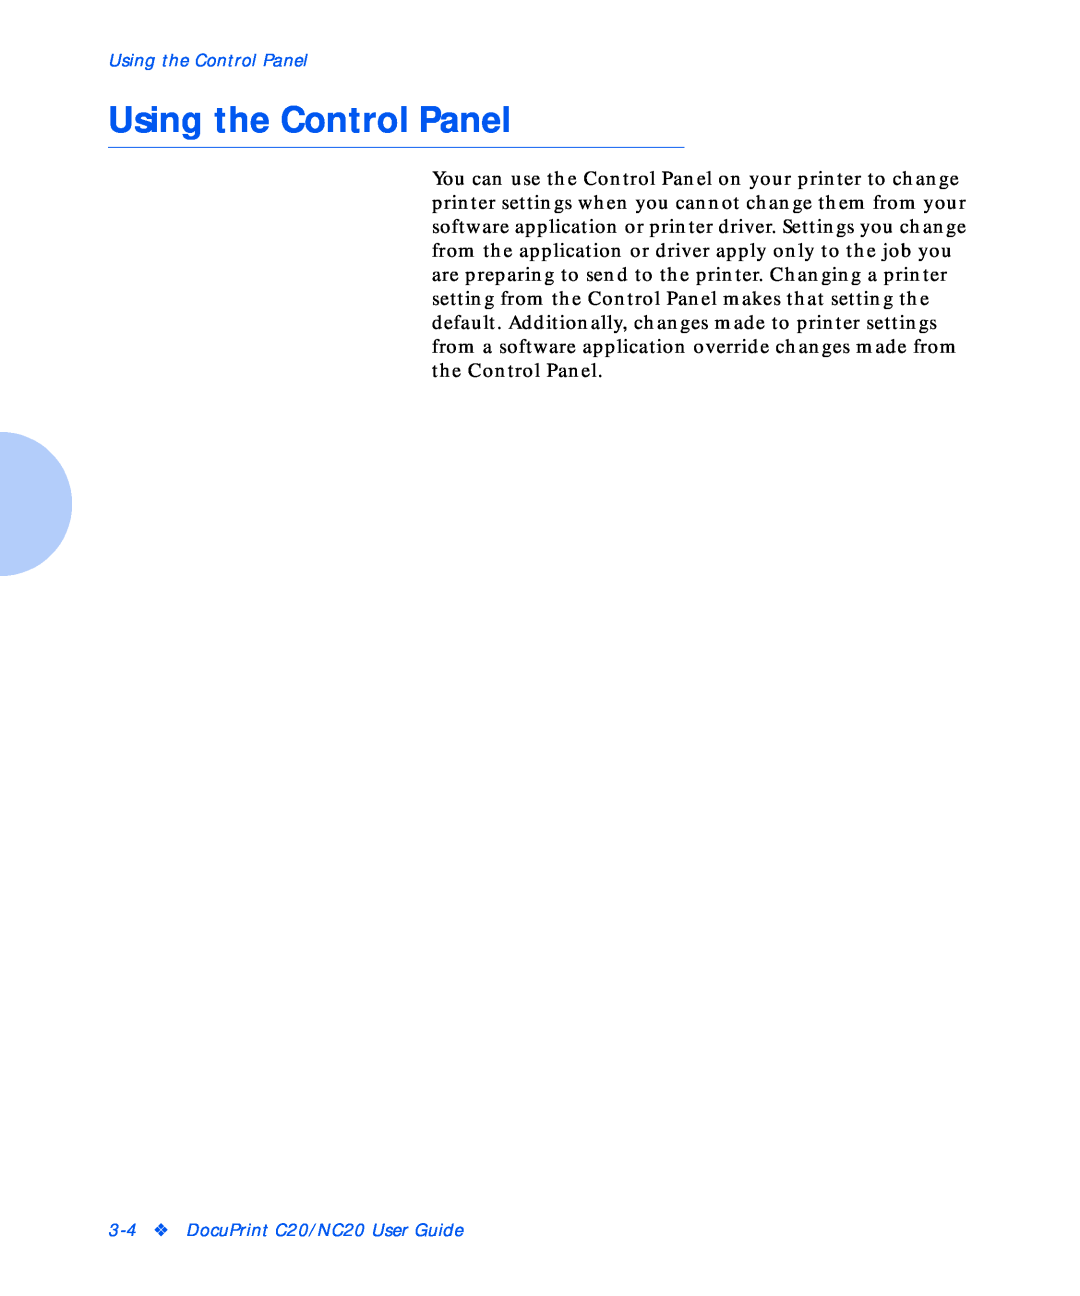 Xerox manual Using the Control Panel, DocuPrint C20/NC20 User Guide 